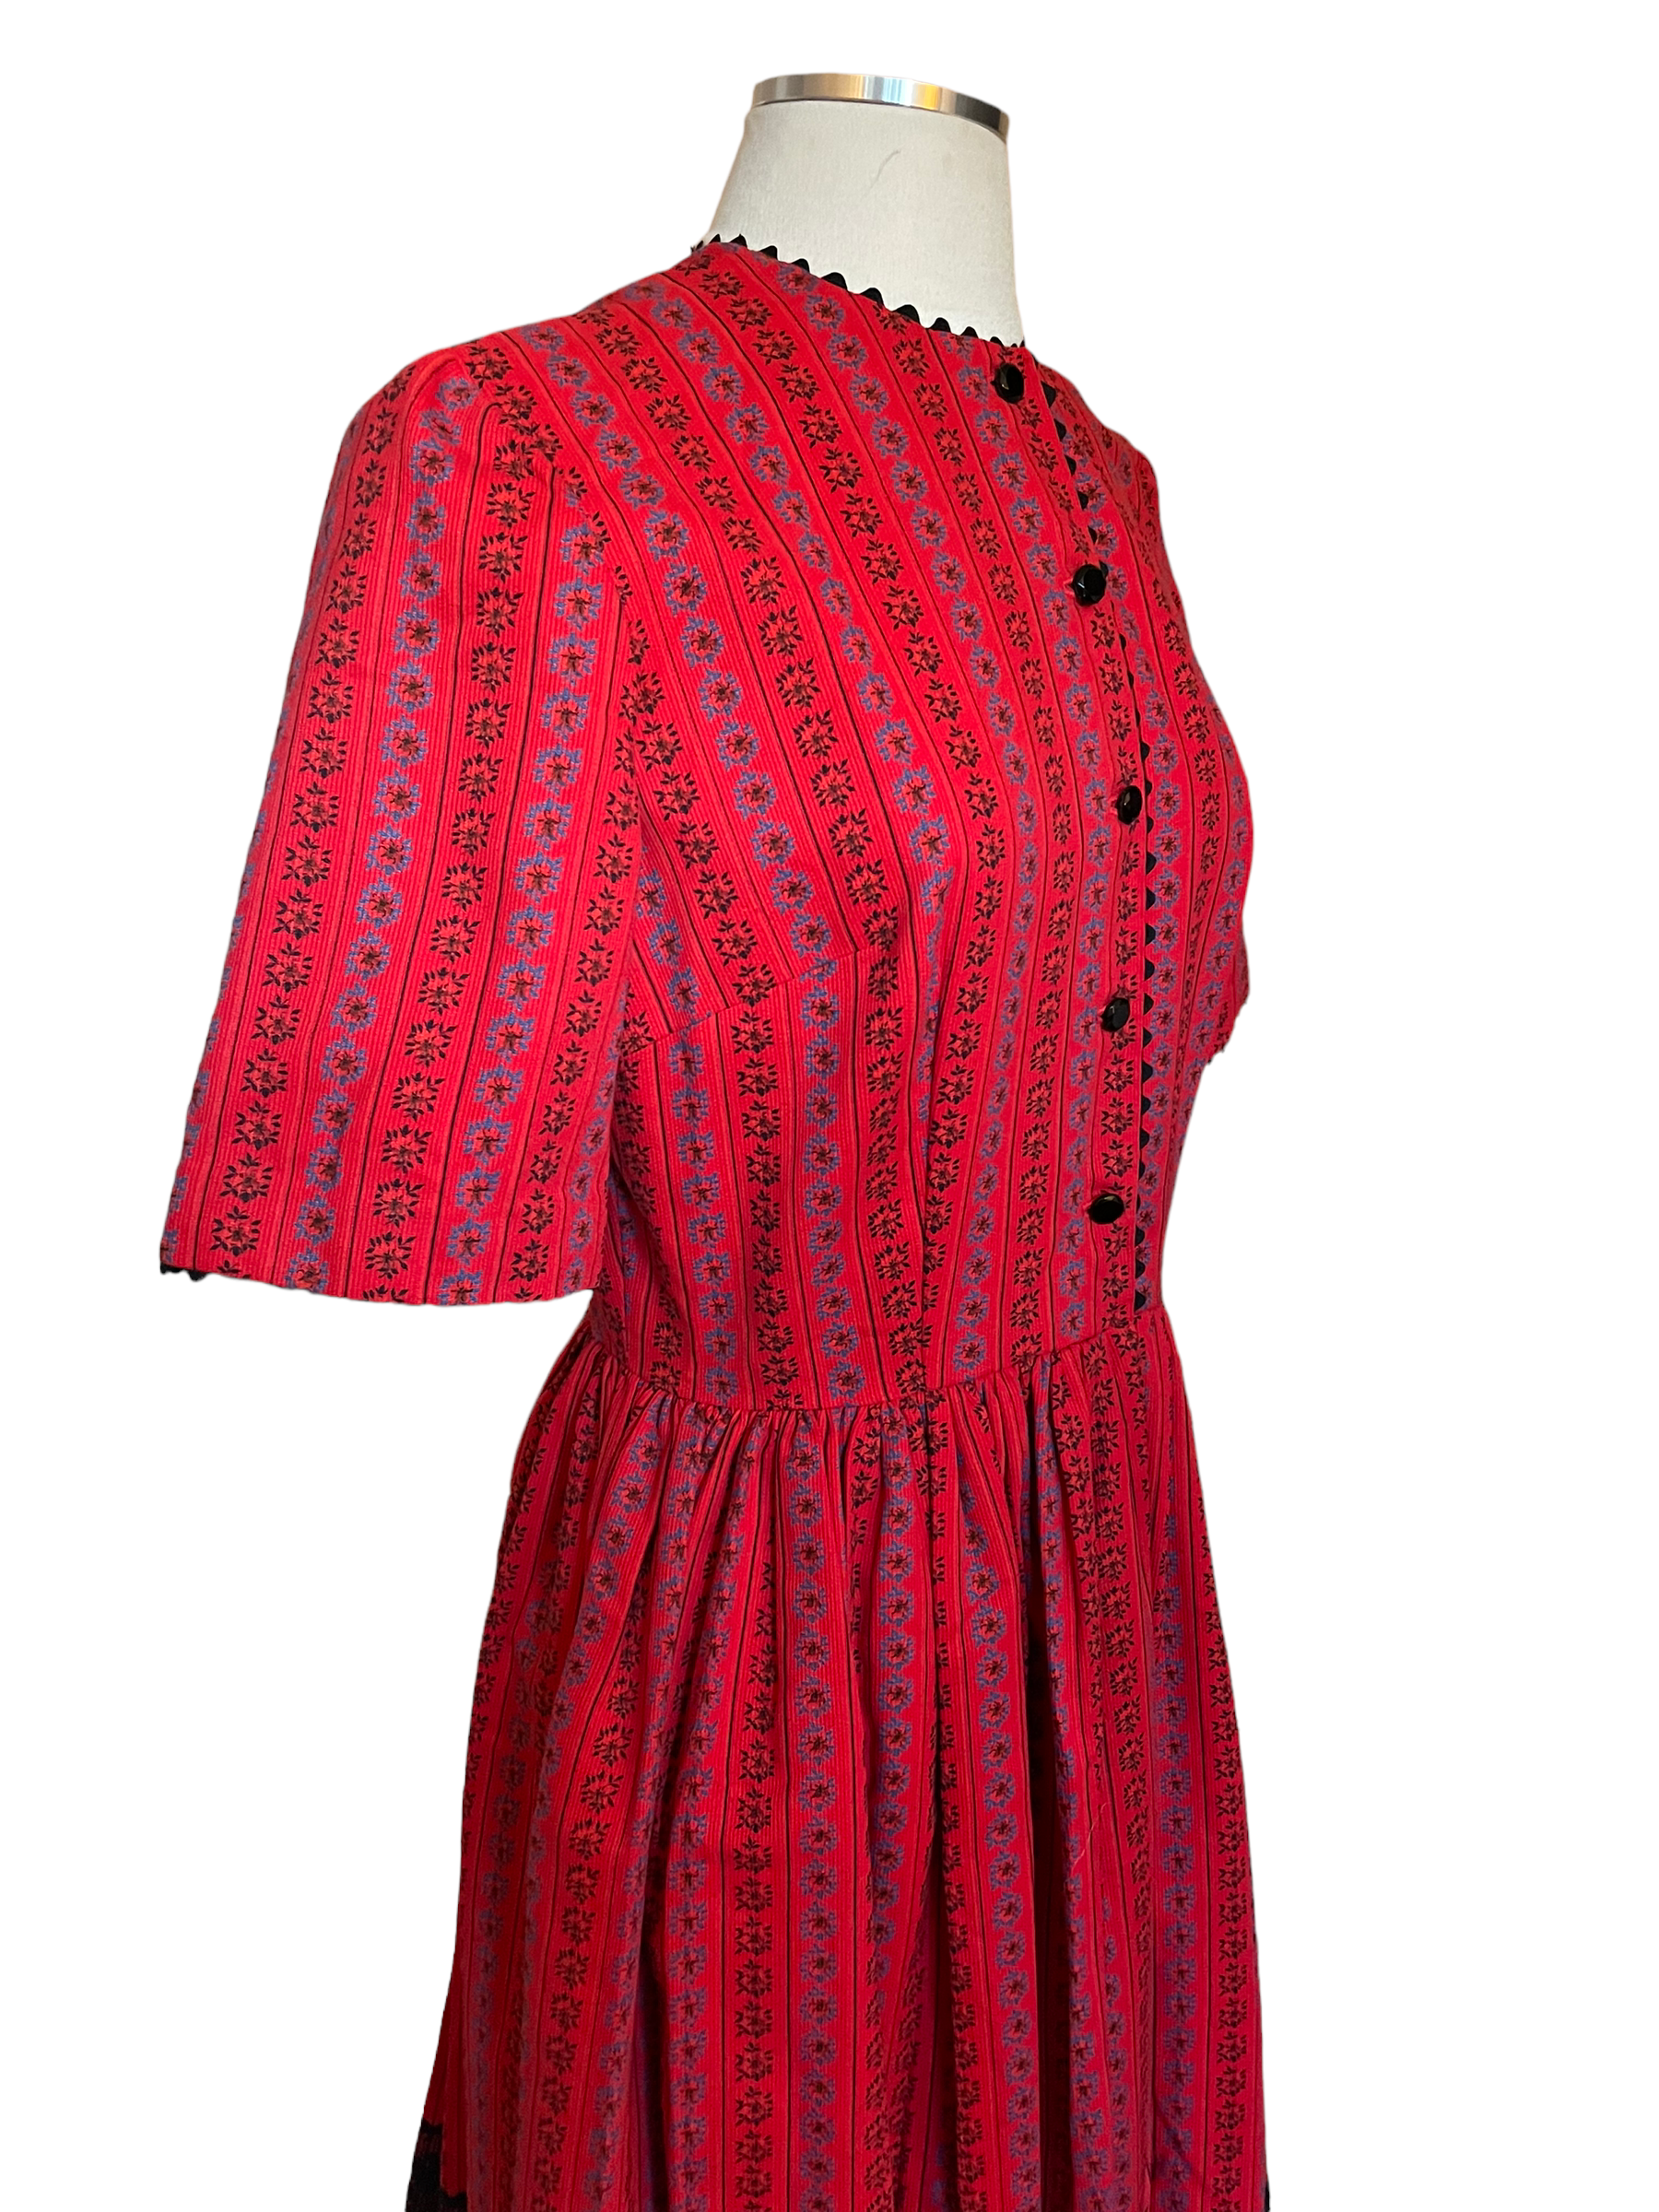 Vintage 1950s Red Corduroy Dress SZ S-M |  Barn Owl Vintage | Seattle Vintage Dresses Right upper side view.